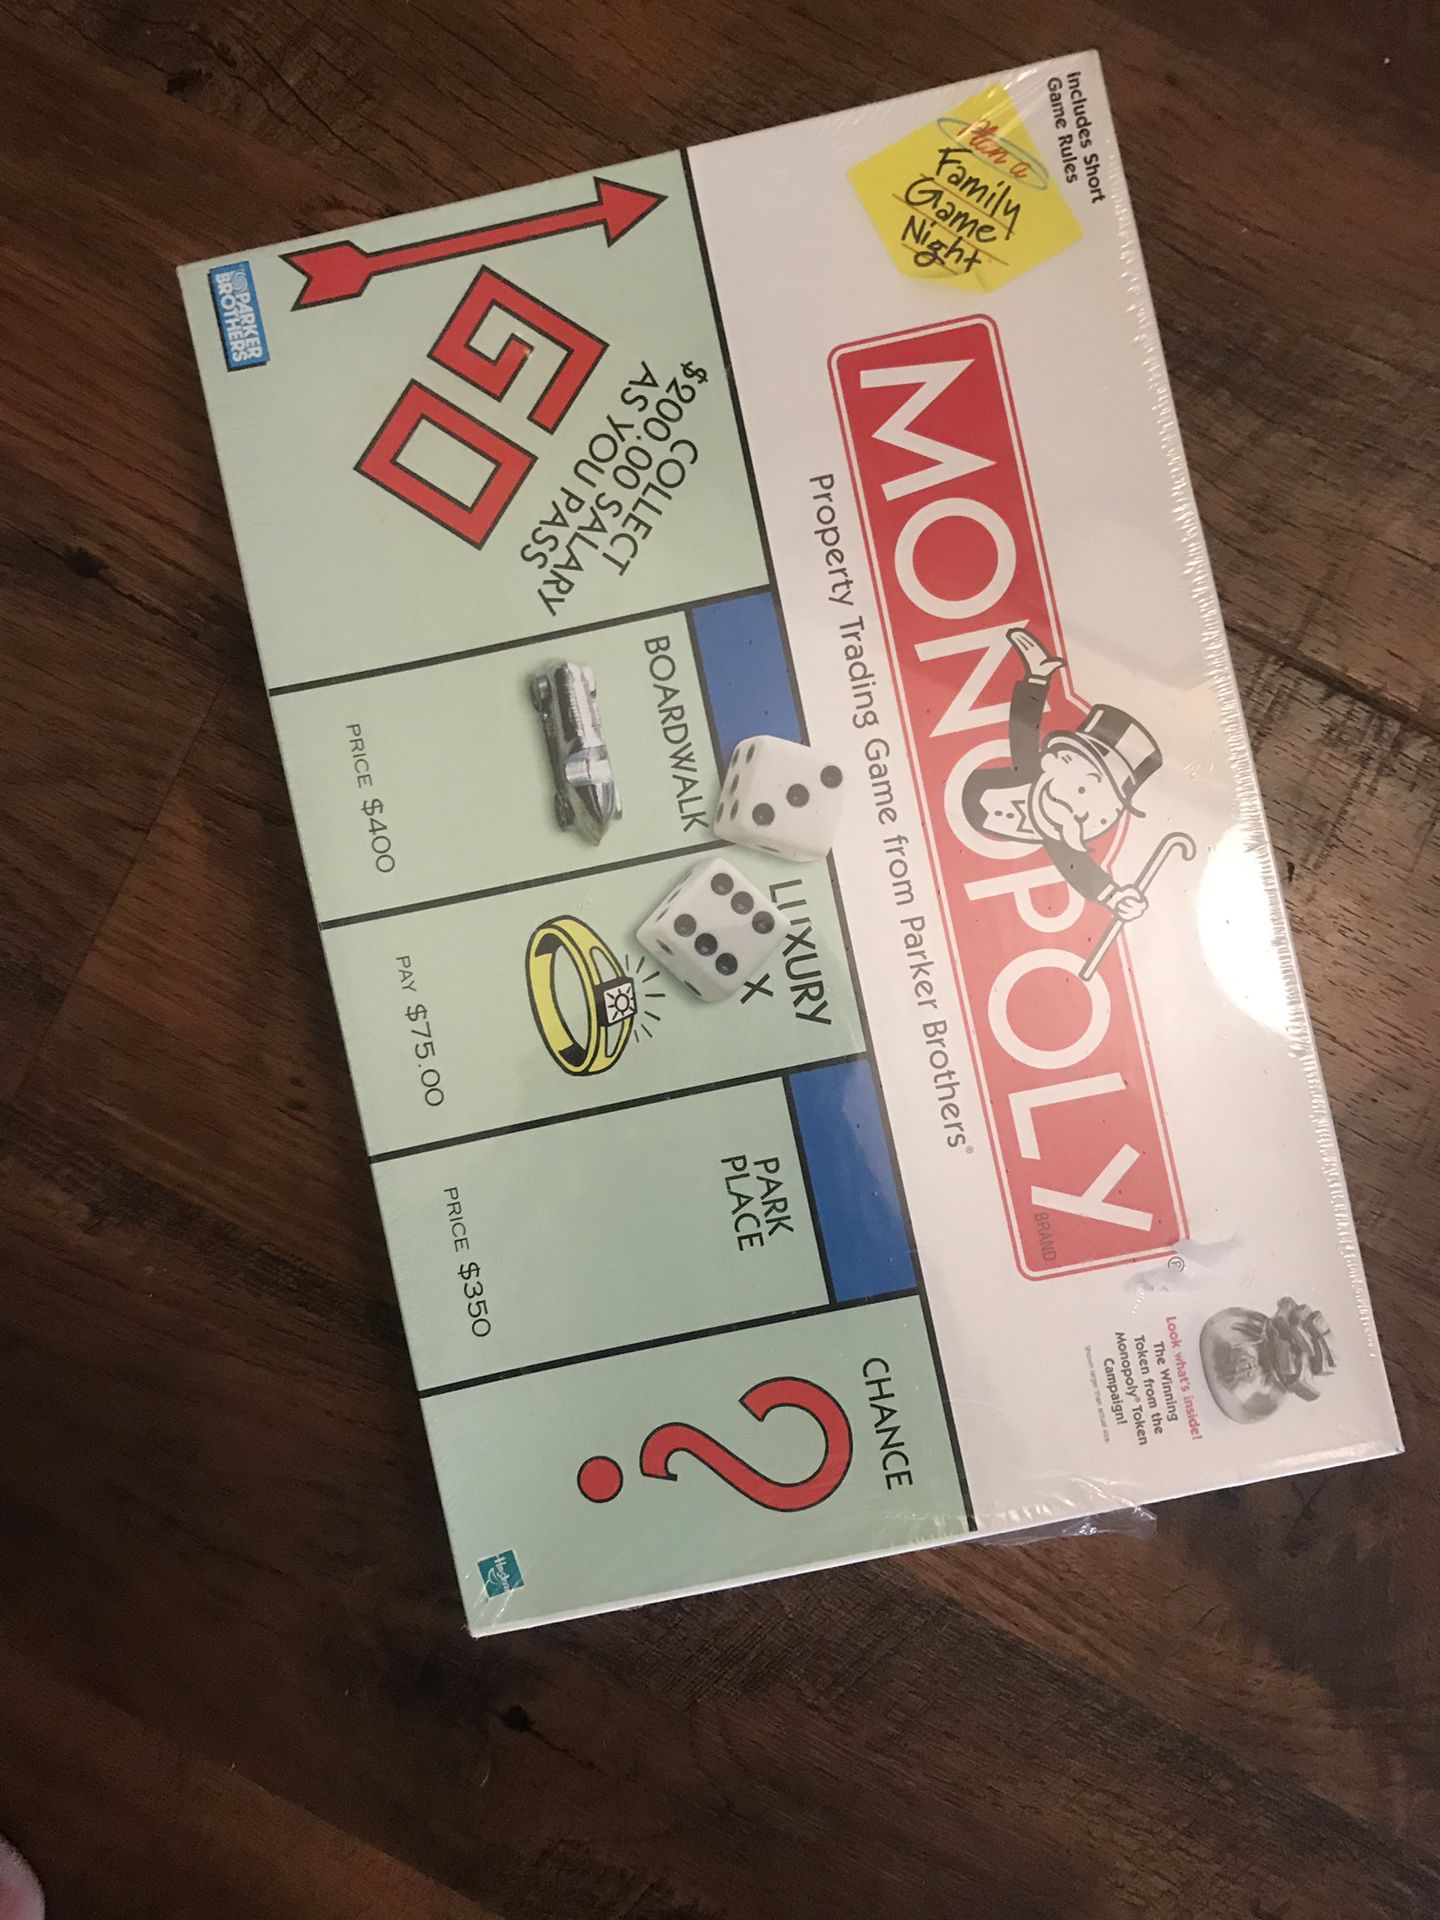 Monopoly winning token edition